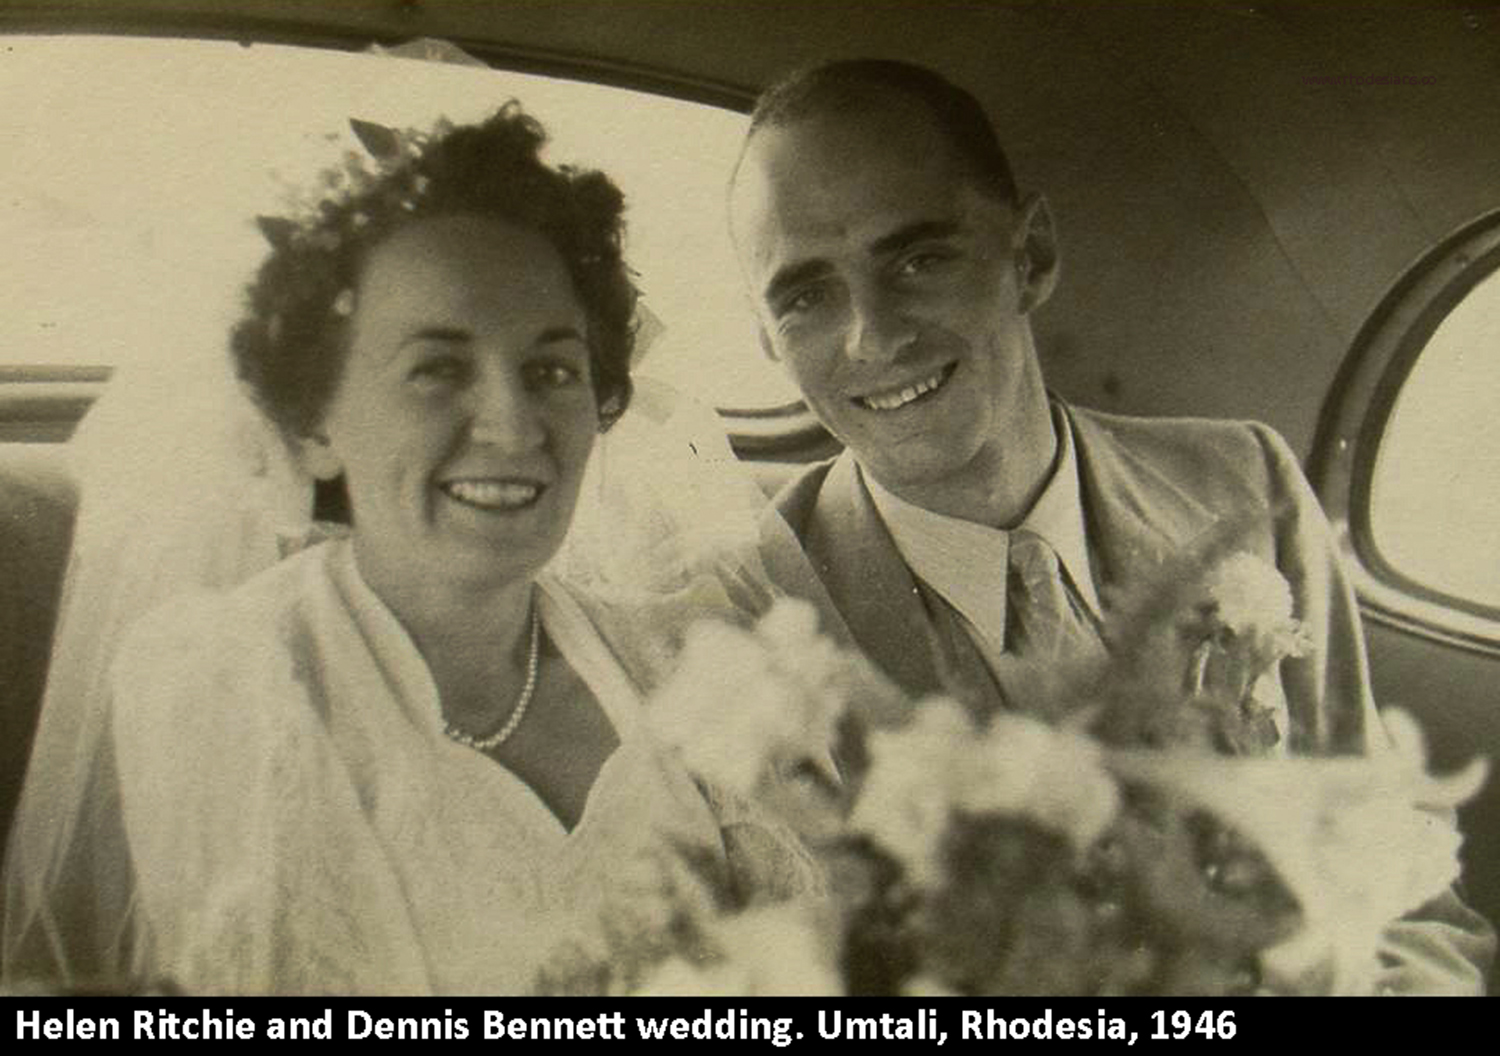 Helen Ritchie married to Dennis Bennett at Umtali 1946